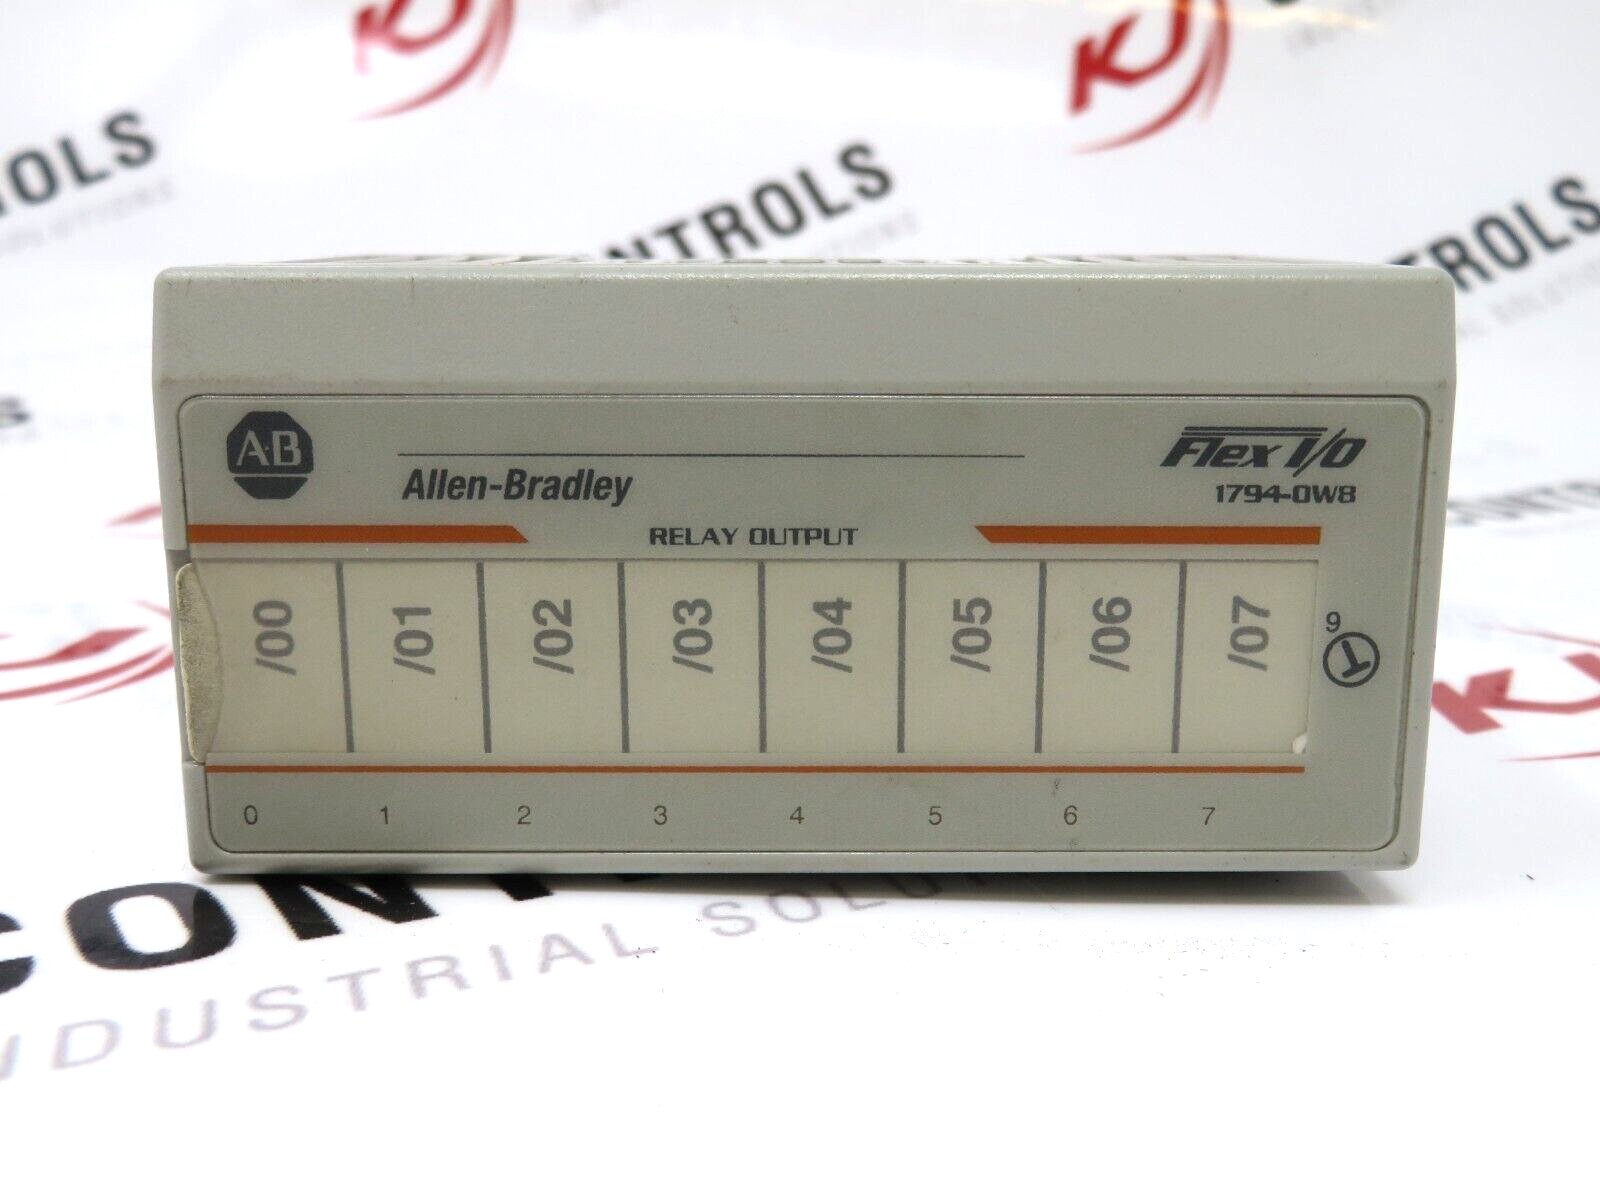 Allen-Bradley 1794-OW8 Flex I/O Relay 8-Point Isolated Output Module